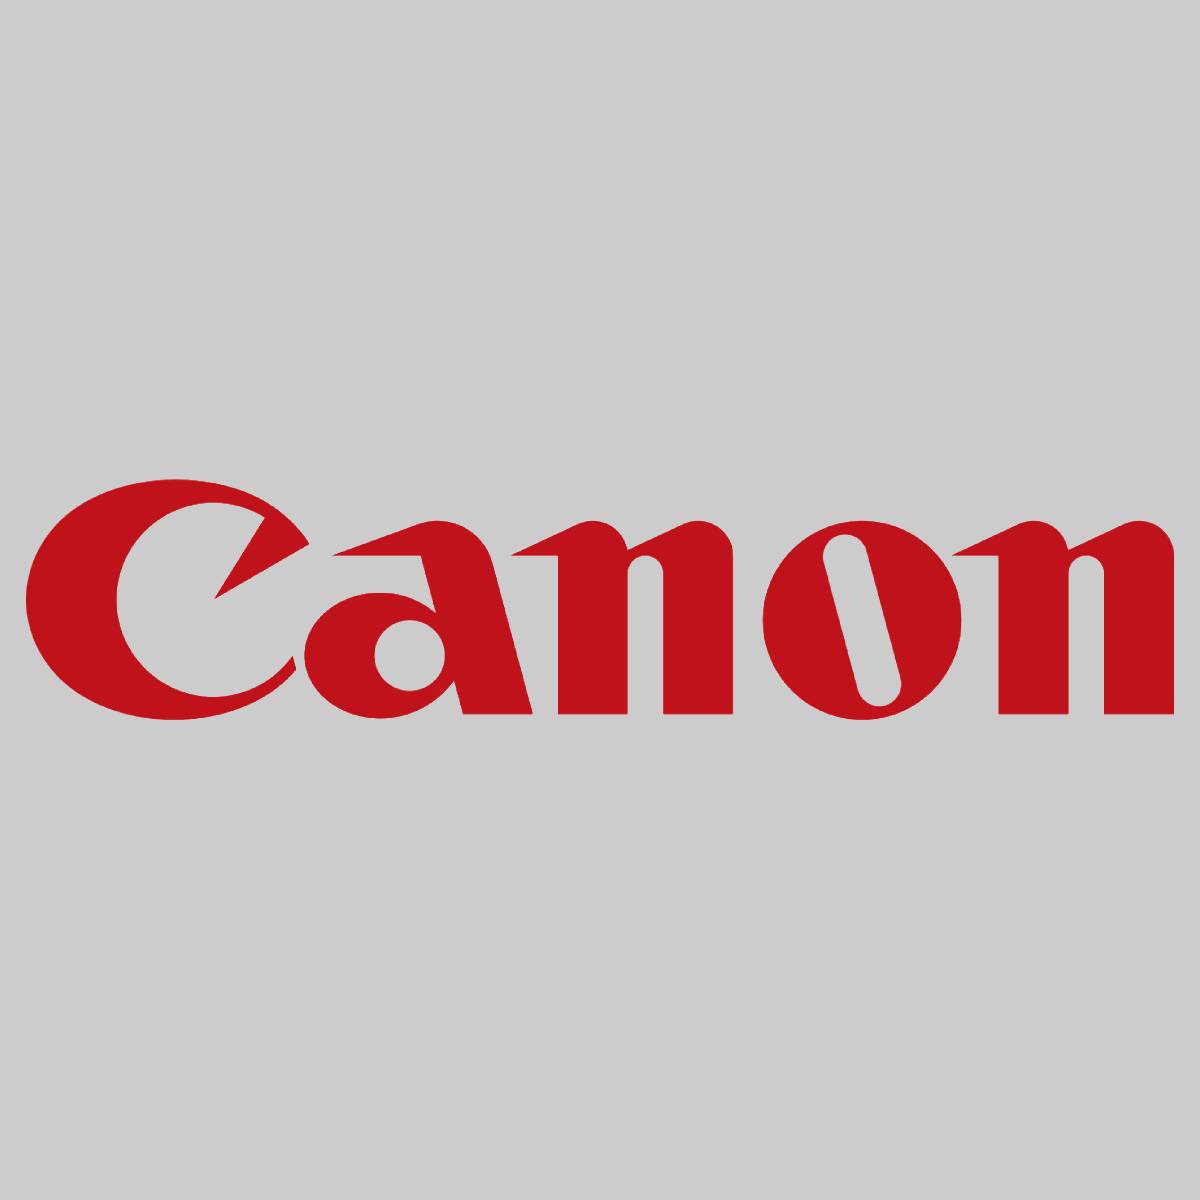 "Canon C-EXV 29 toner purpurový 2798B002 iR ADVANCE C5030 C5035 C5235 C5240